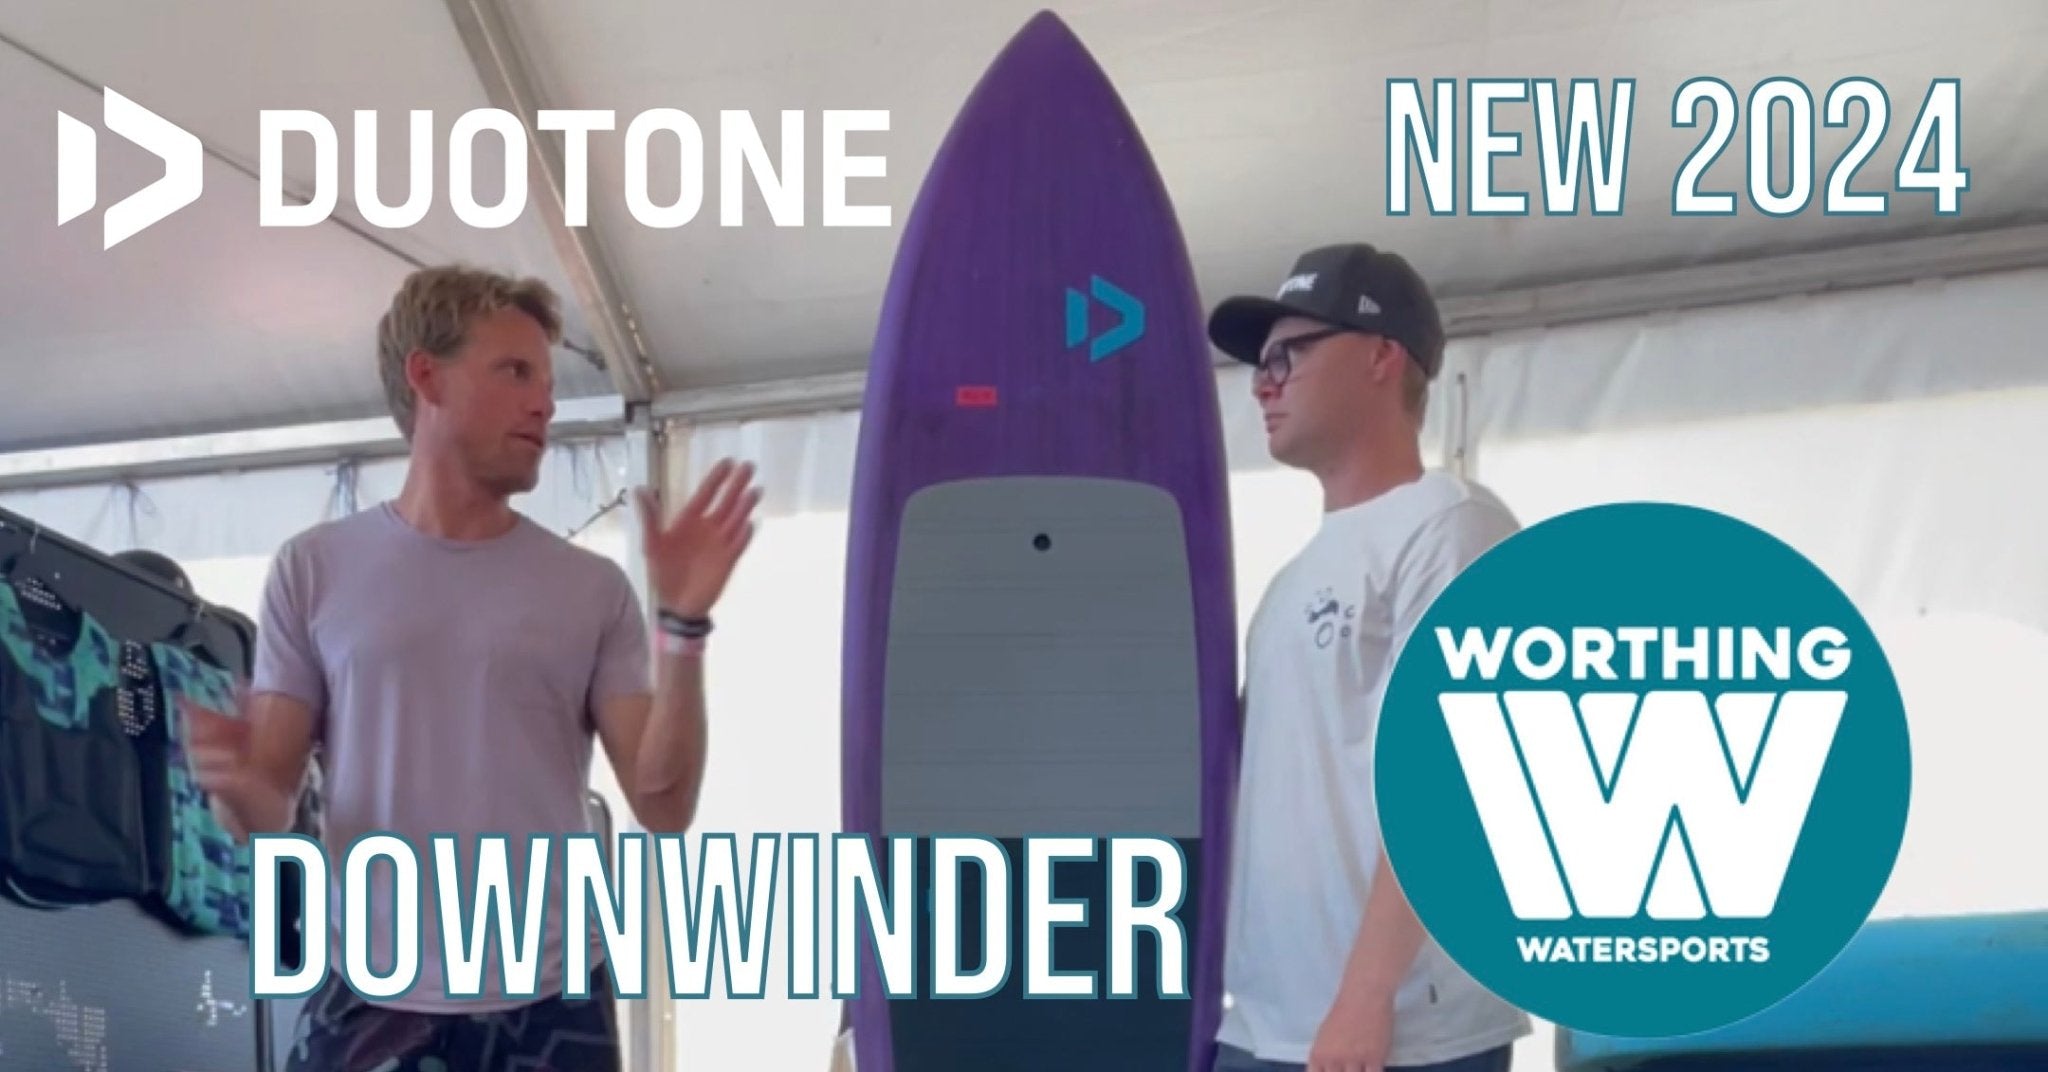 Video - New Duotone Downwinder SLS - Worthing Watersports